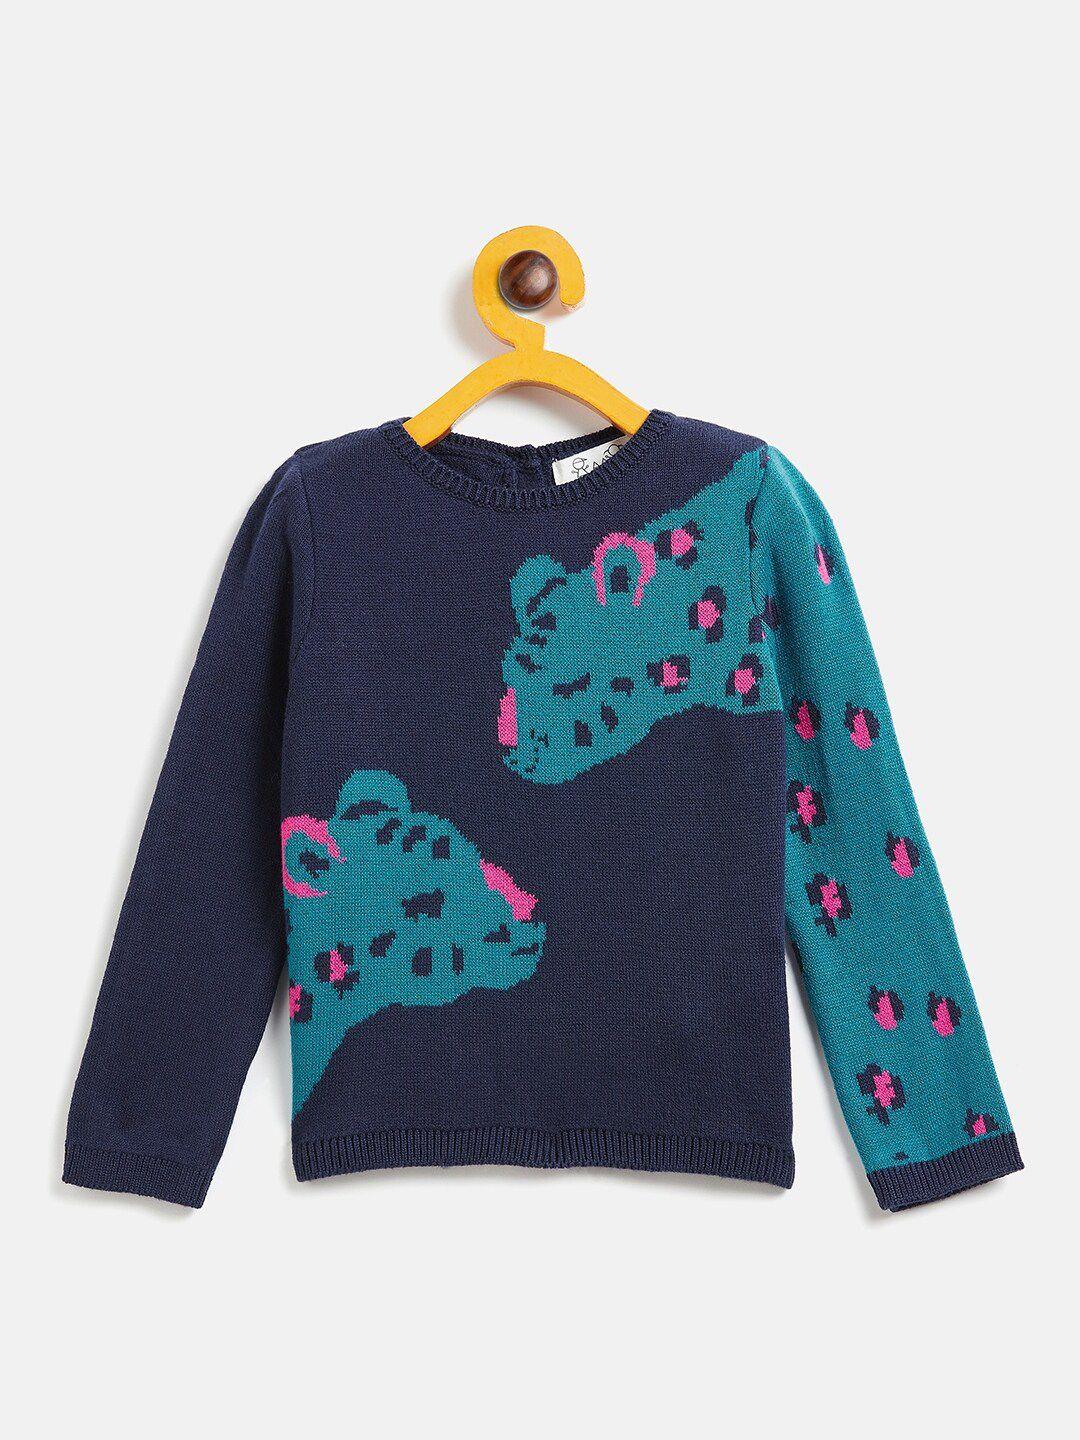 jwaaq-unisex-kids-navy-blue-&-pink-animal-printed-pullover